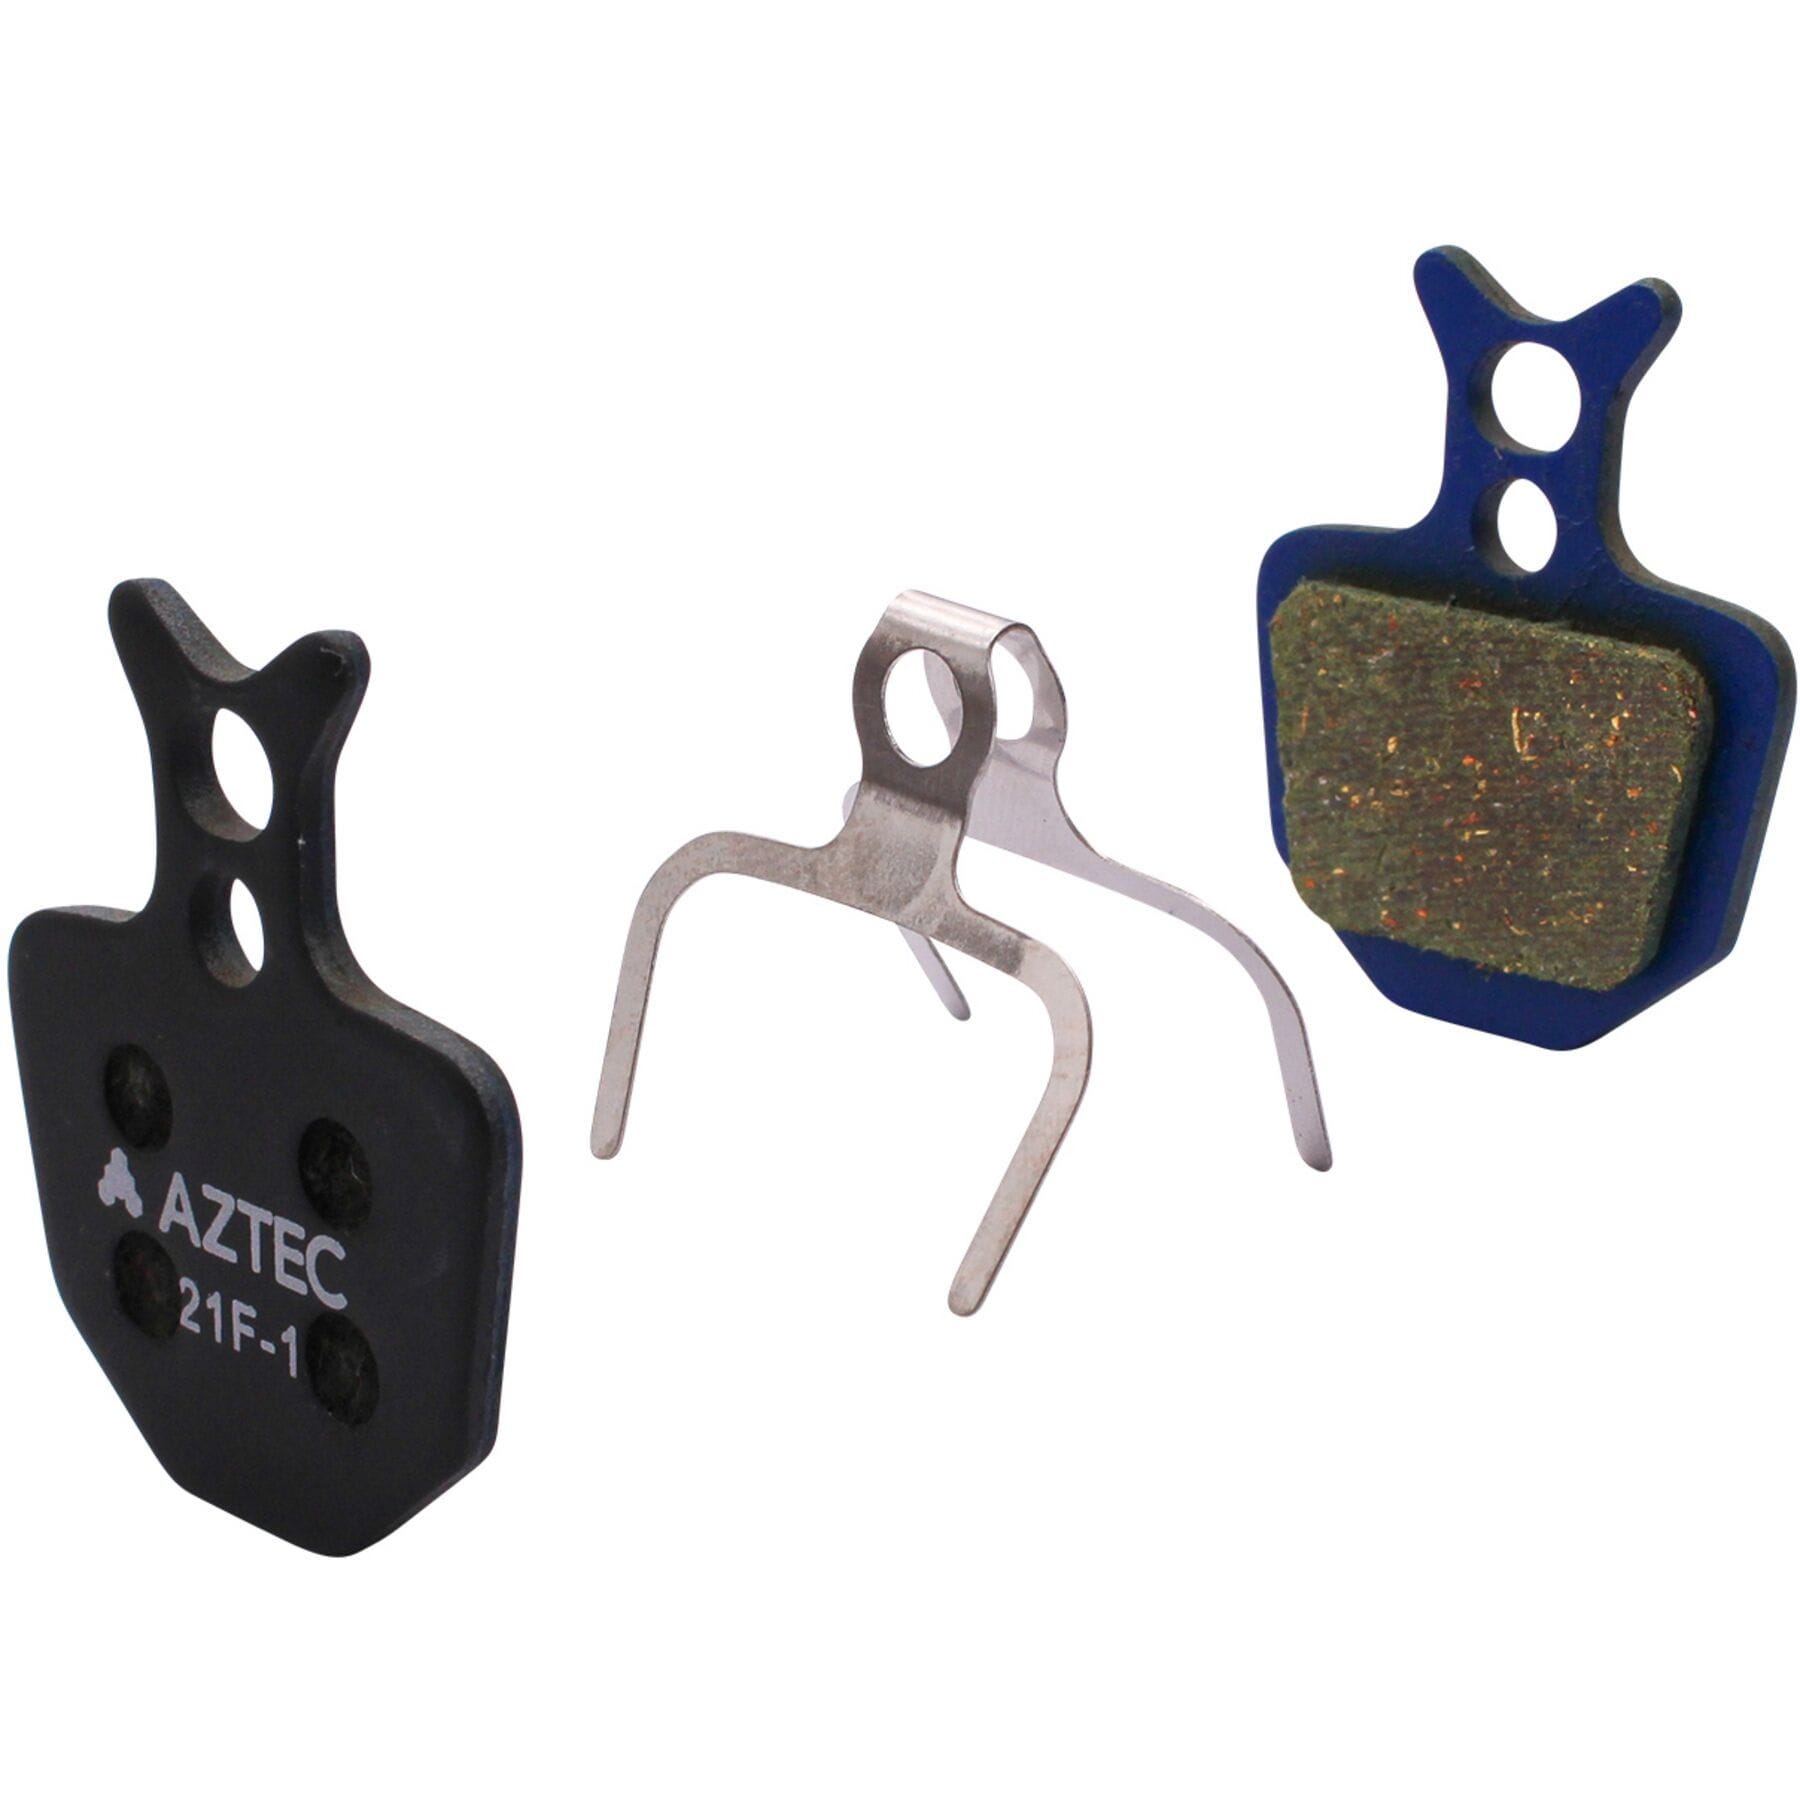 Aztec Organic disc brake pads for Formula Oro callipers